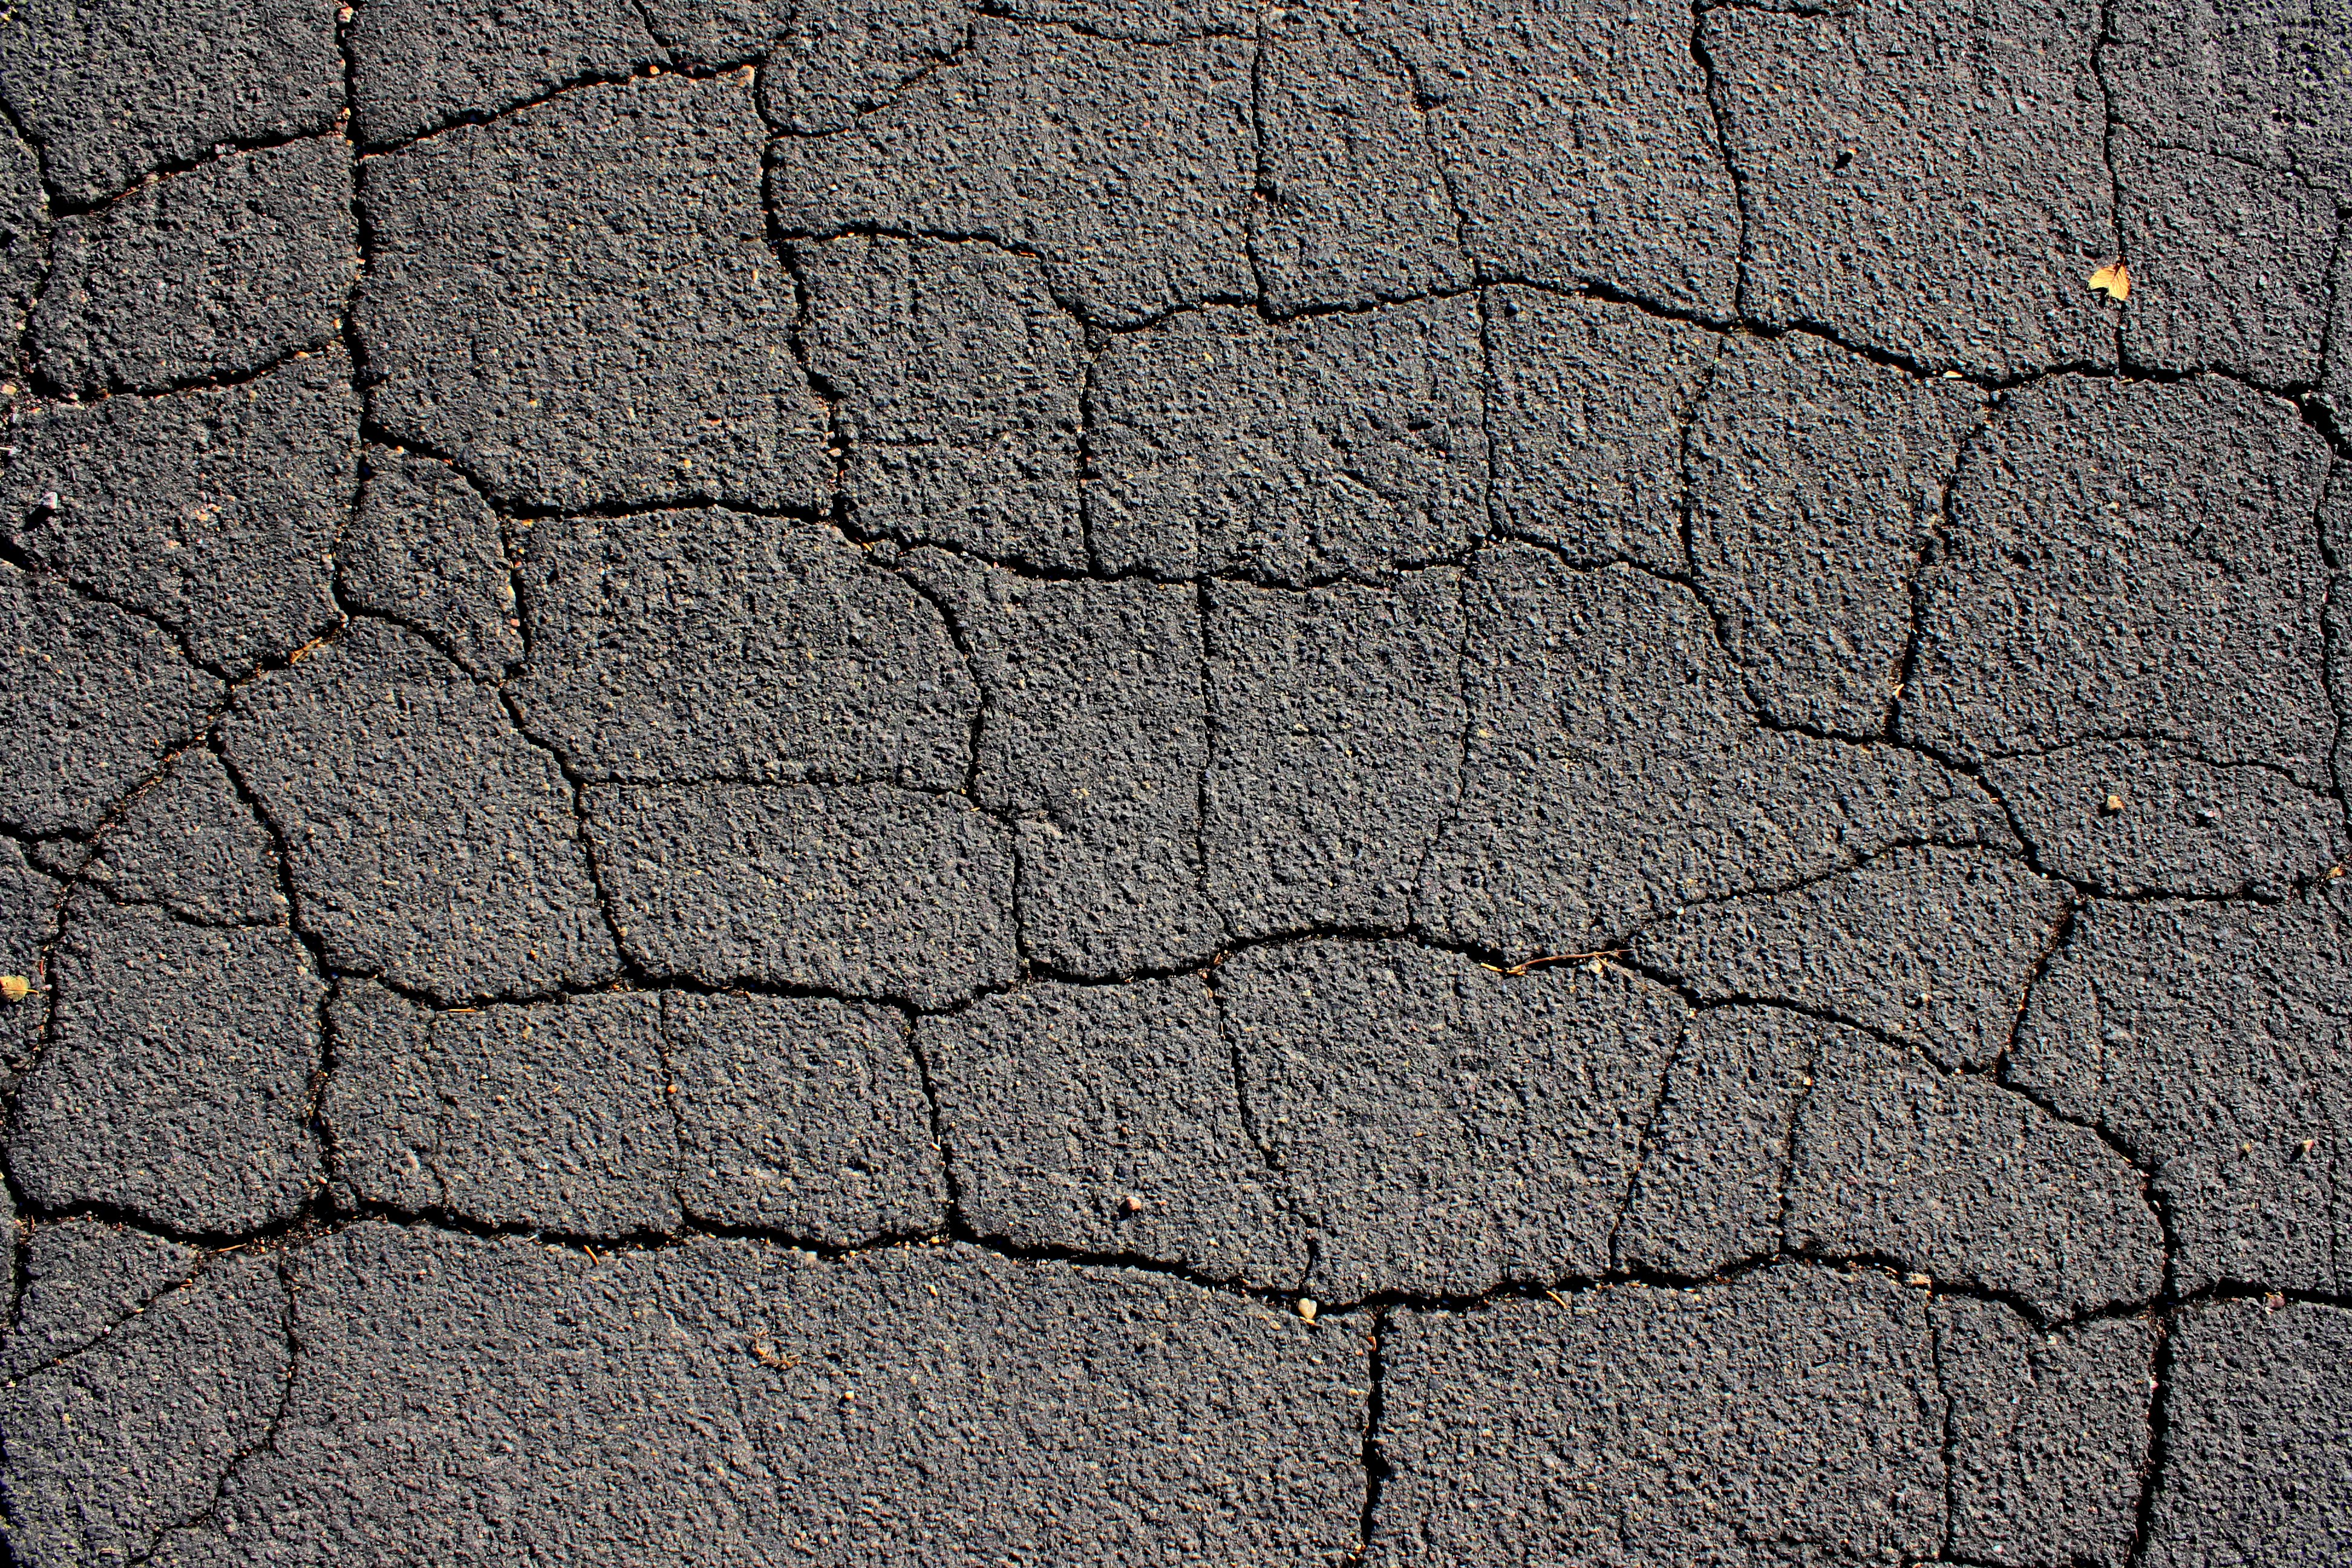 Asphalt Road Texture Free